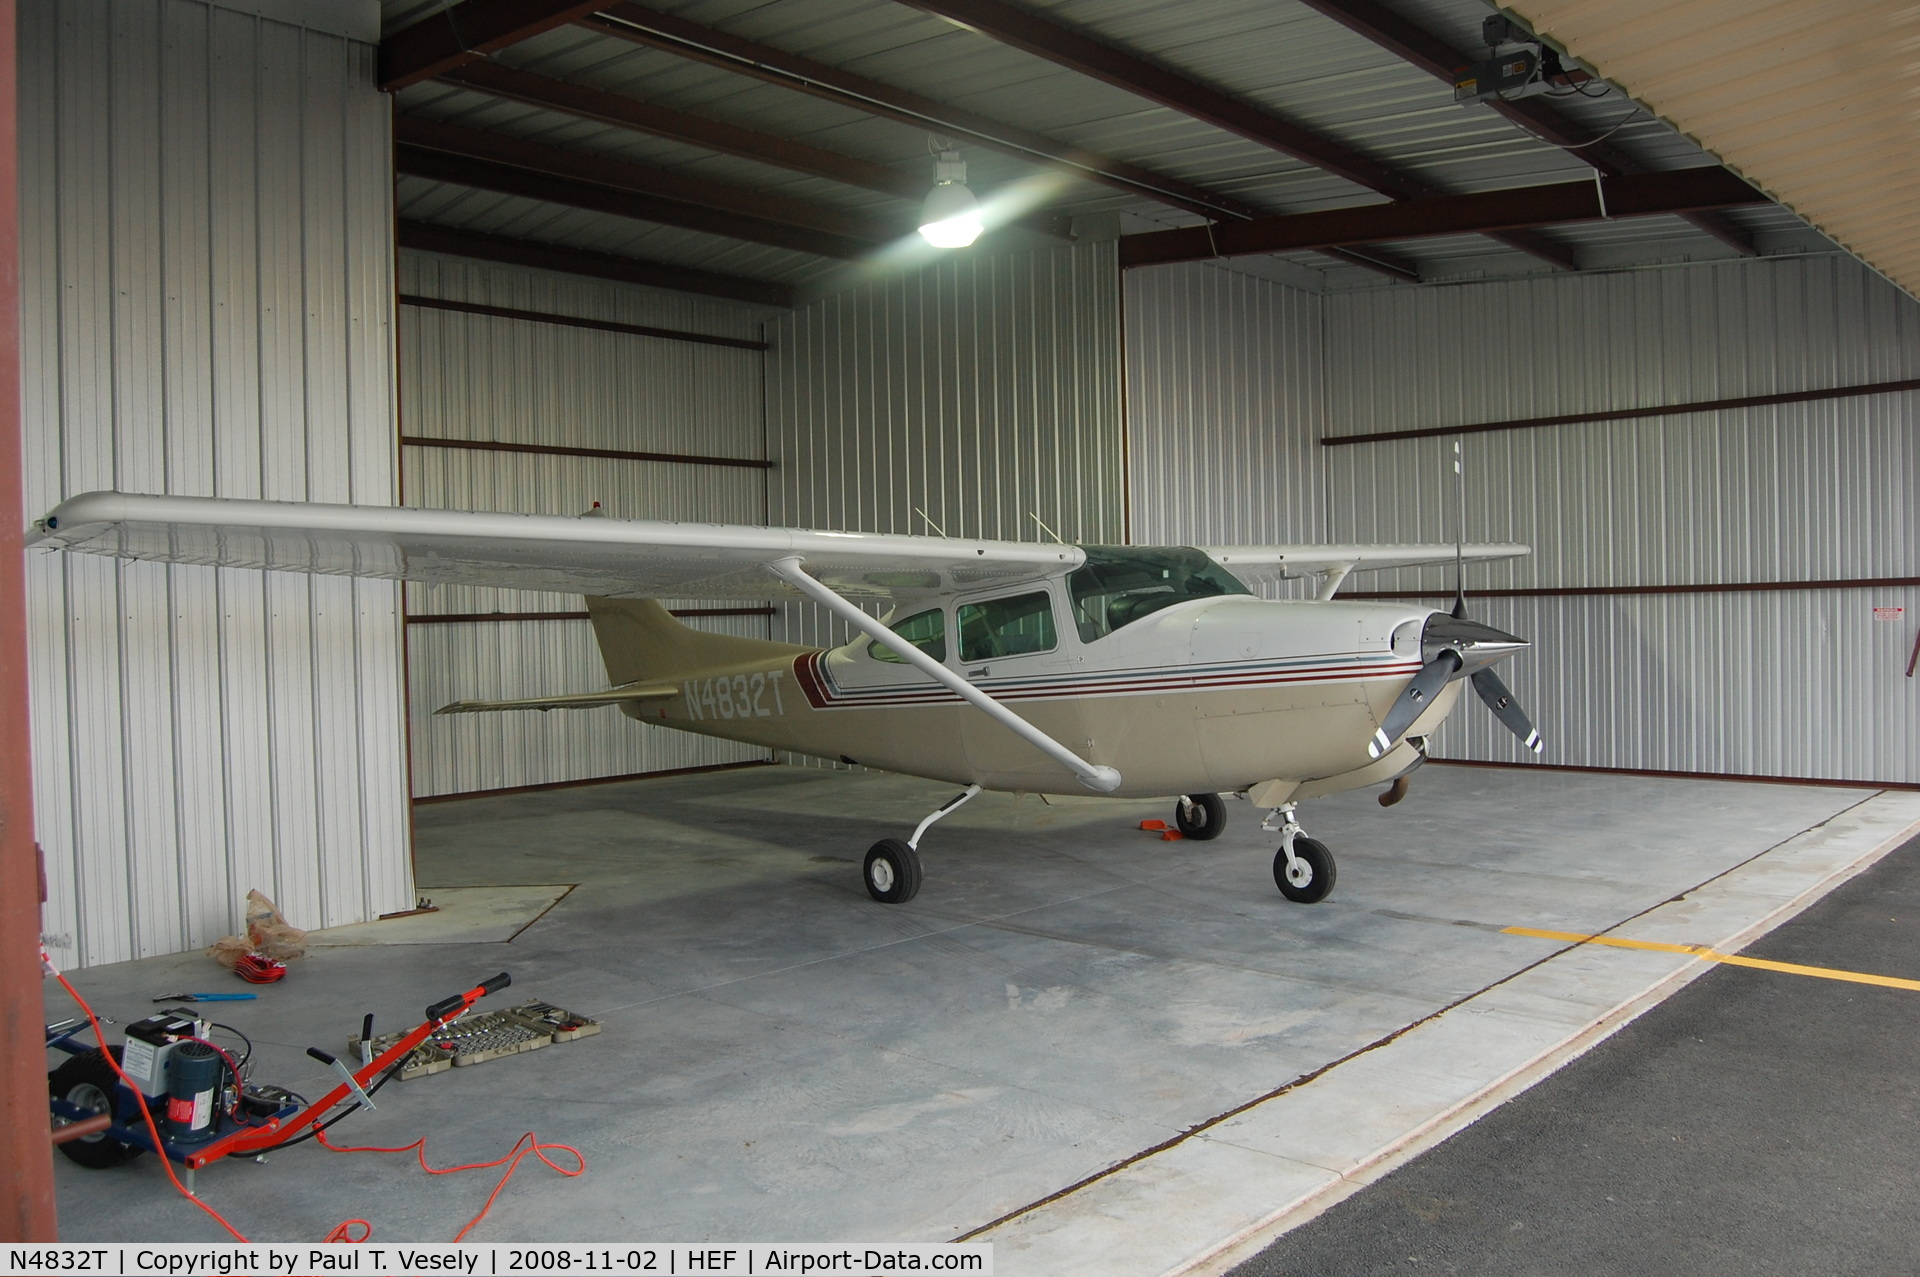 N4832T, 1981 Cessna TR182 Turbo Skylane RG C/N R18201772, N4832T in the hangar